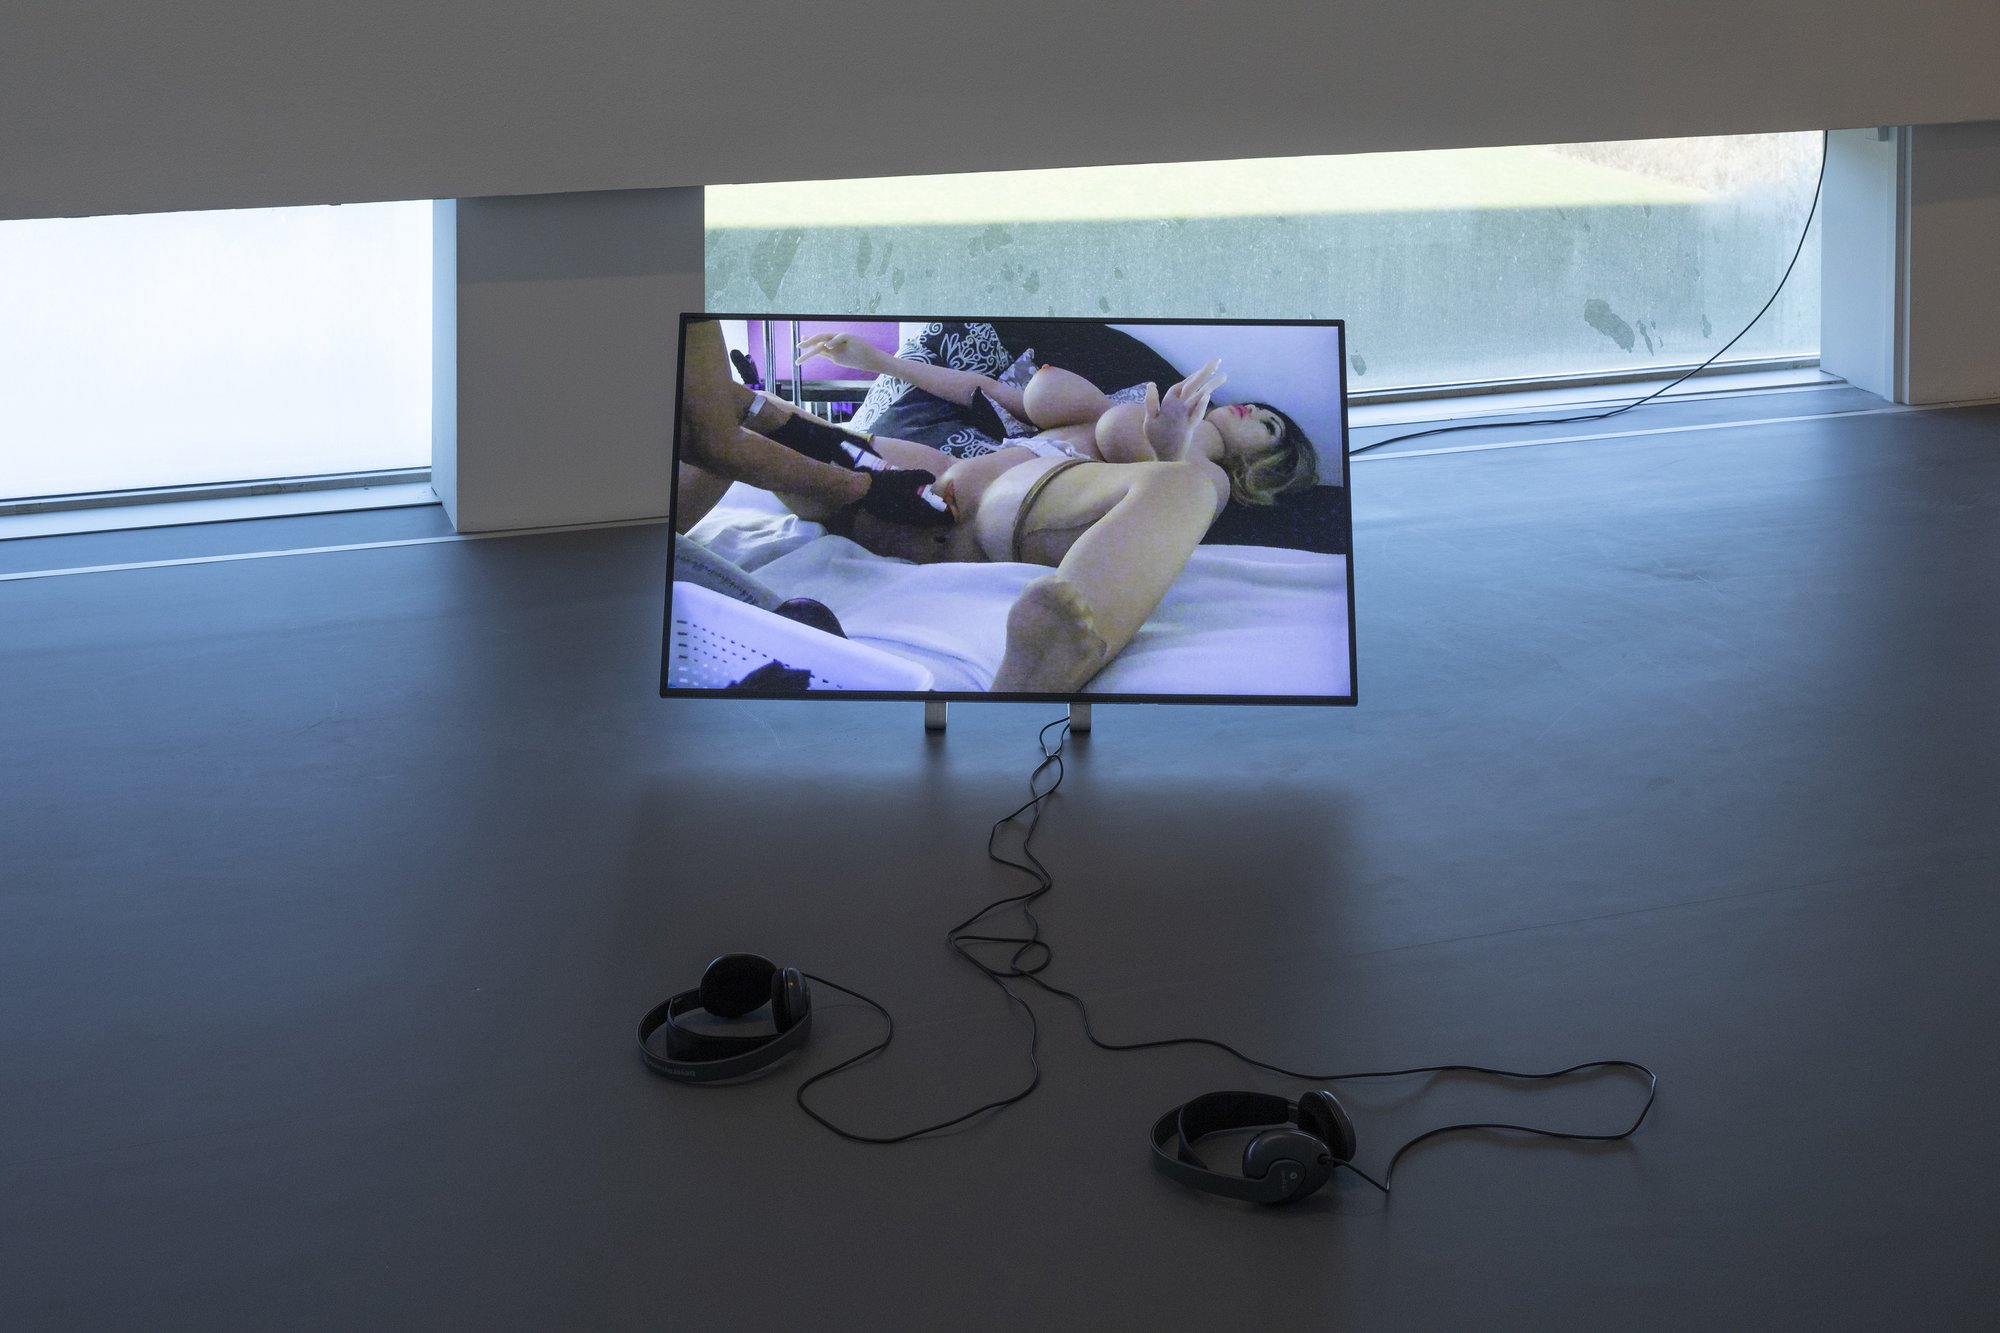 Installation view, Sidsel Meineche Hansen, An Artist’s Guide to Stop Being An Artist, SMK, Copenhagen, 2019